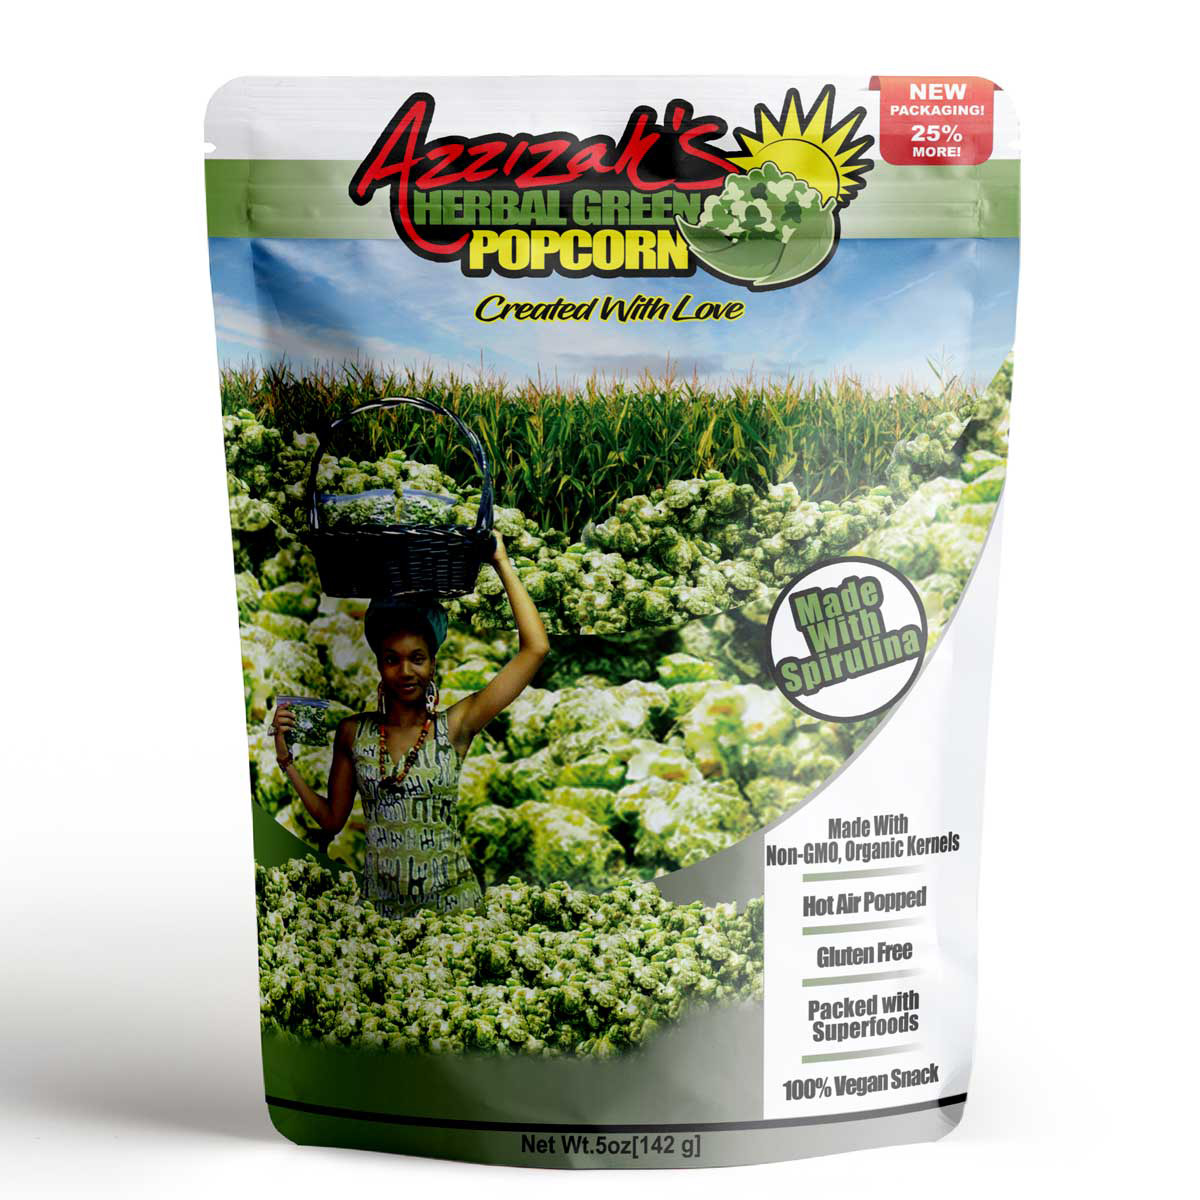 Azzizah's Herbal Green Popcorn